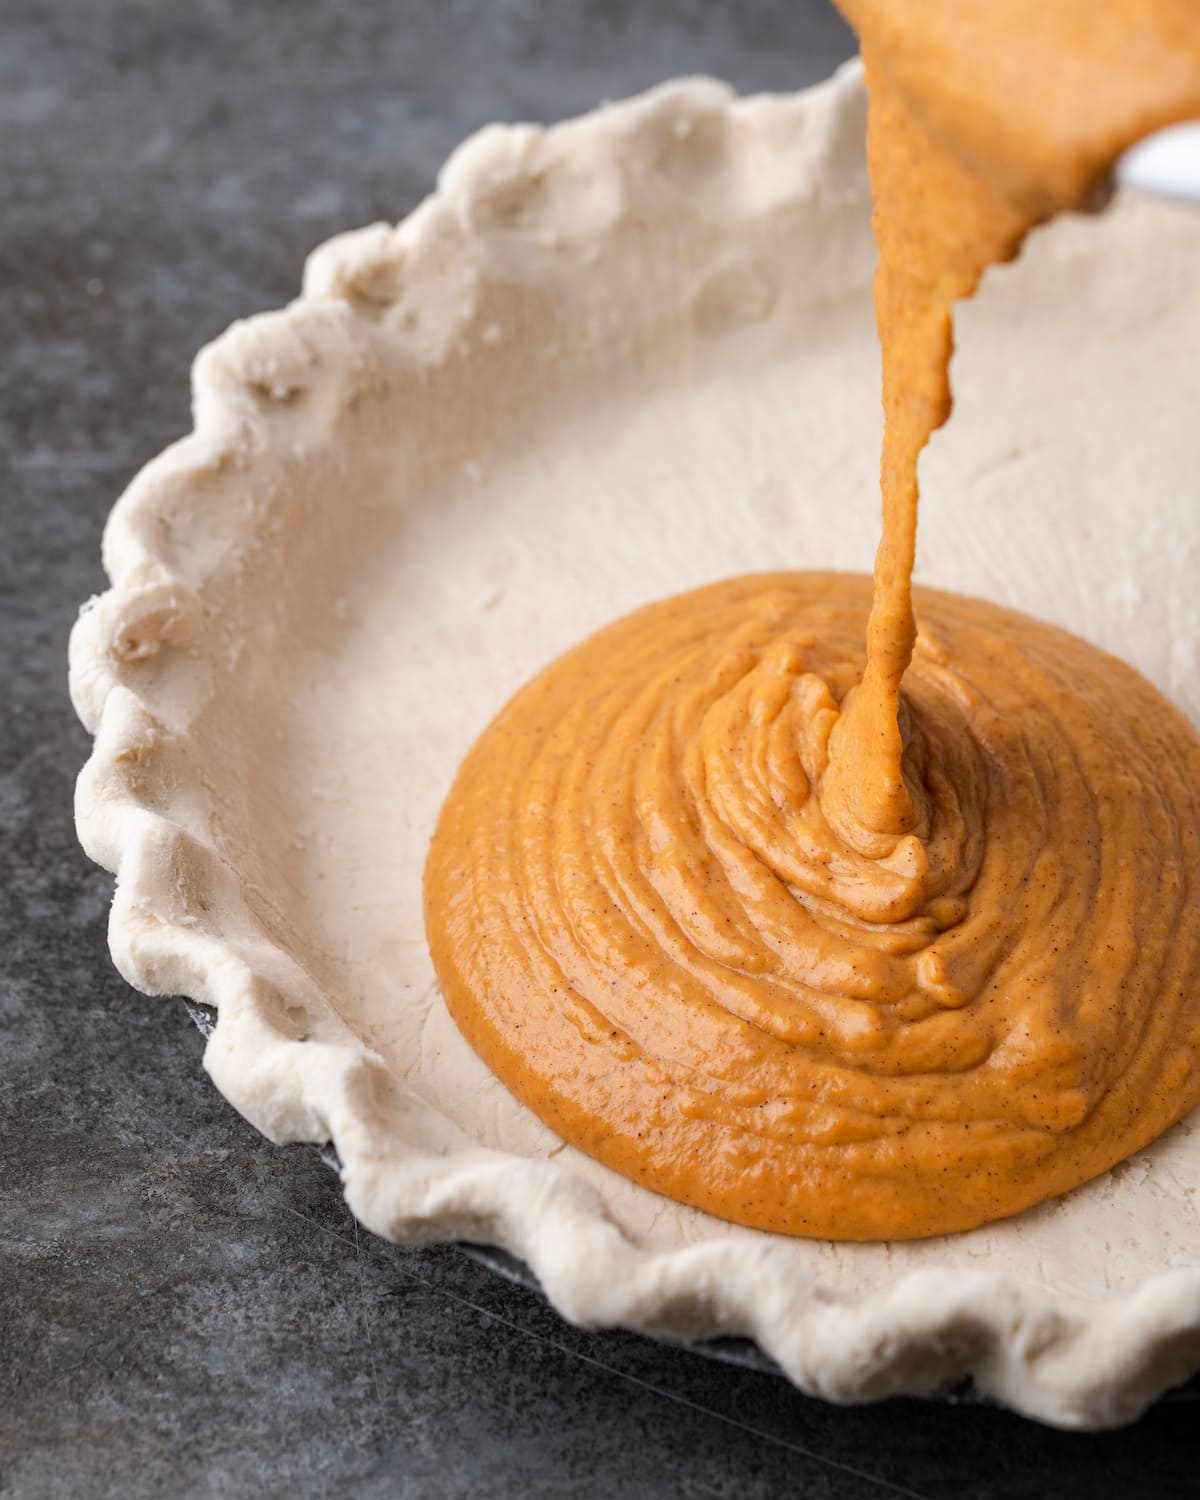 Pumpkin pie filling is poured into a pie crust.